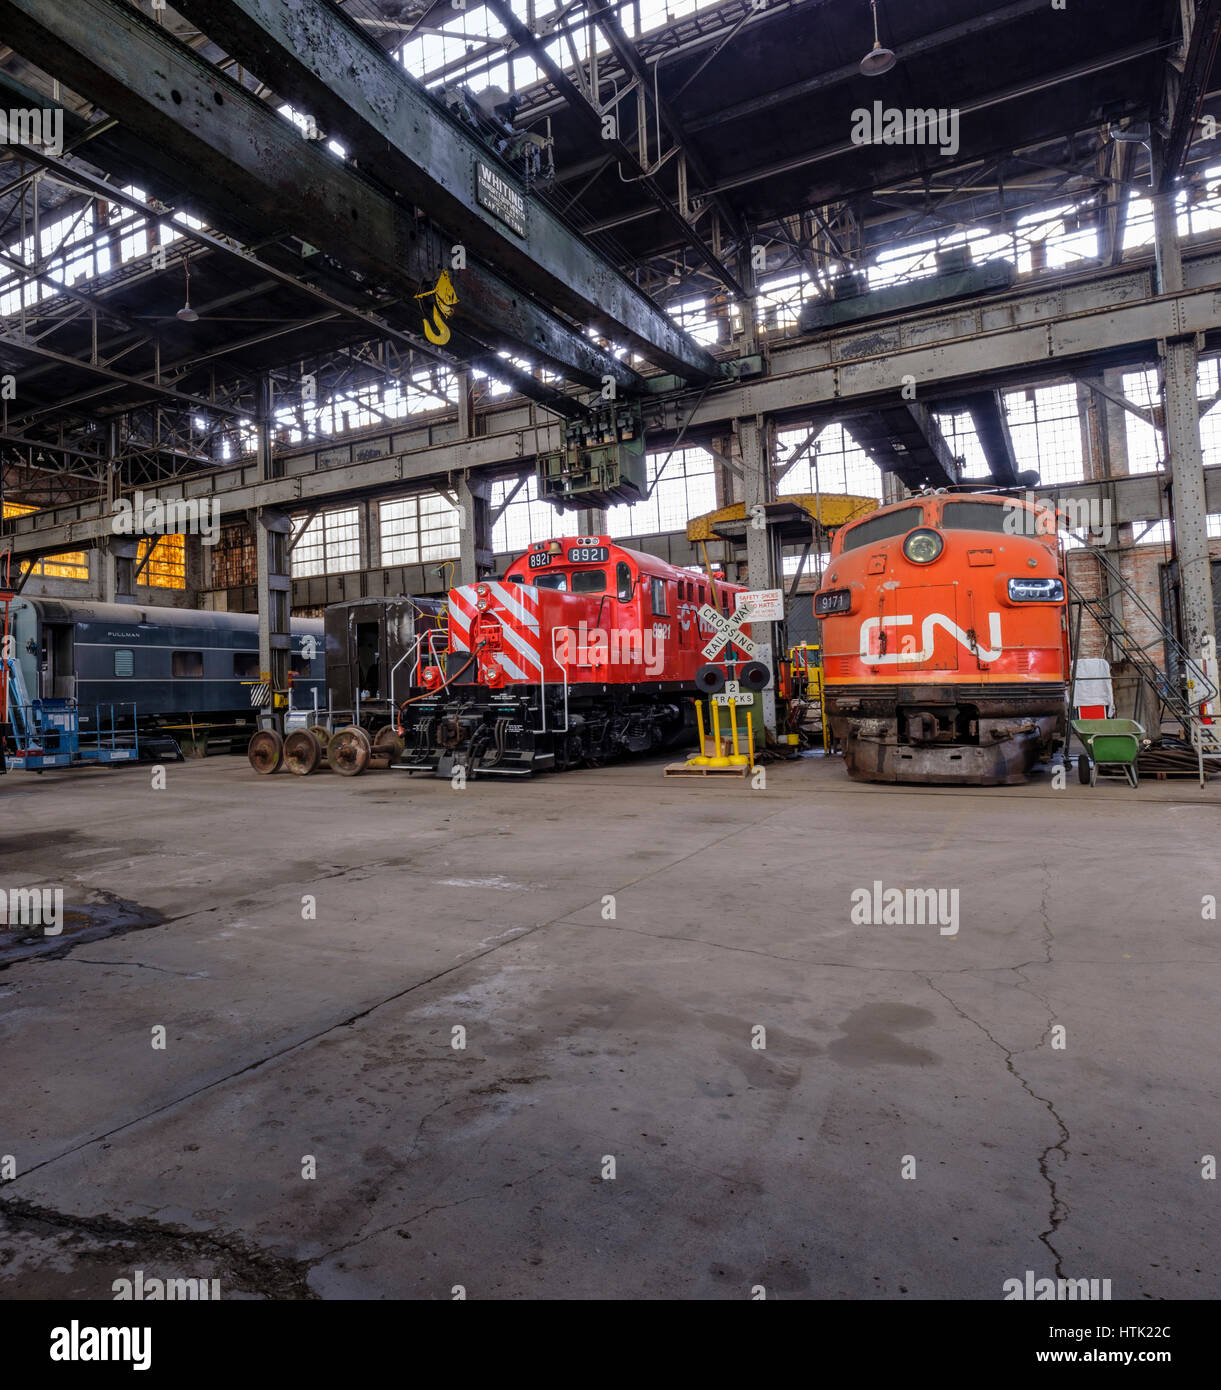 CN diesel locomotive engines inside the Michigan Central Railroad Locomotive Shops / hangar in the Elgin County Railway Museum, St Thomas, Ontario. Stock Photo